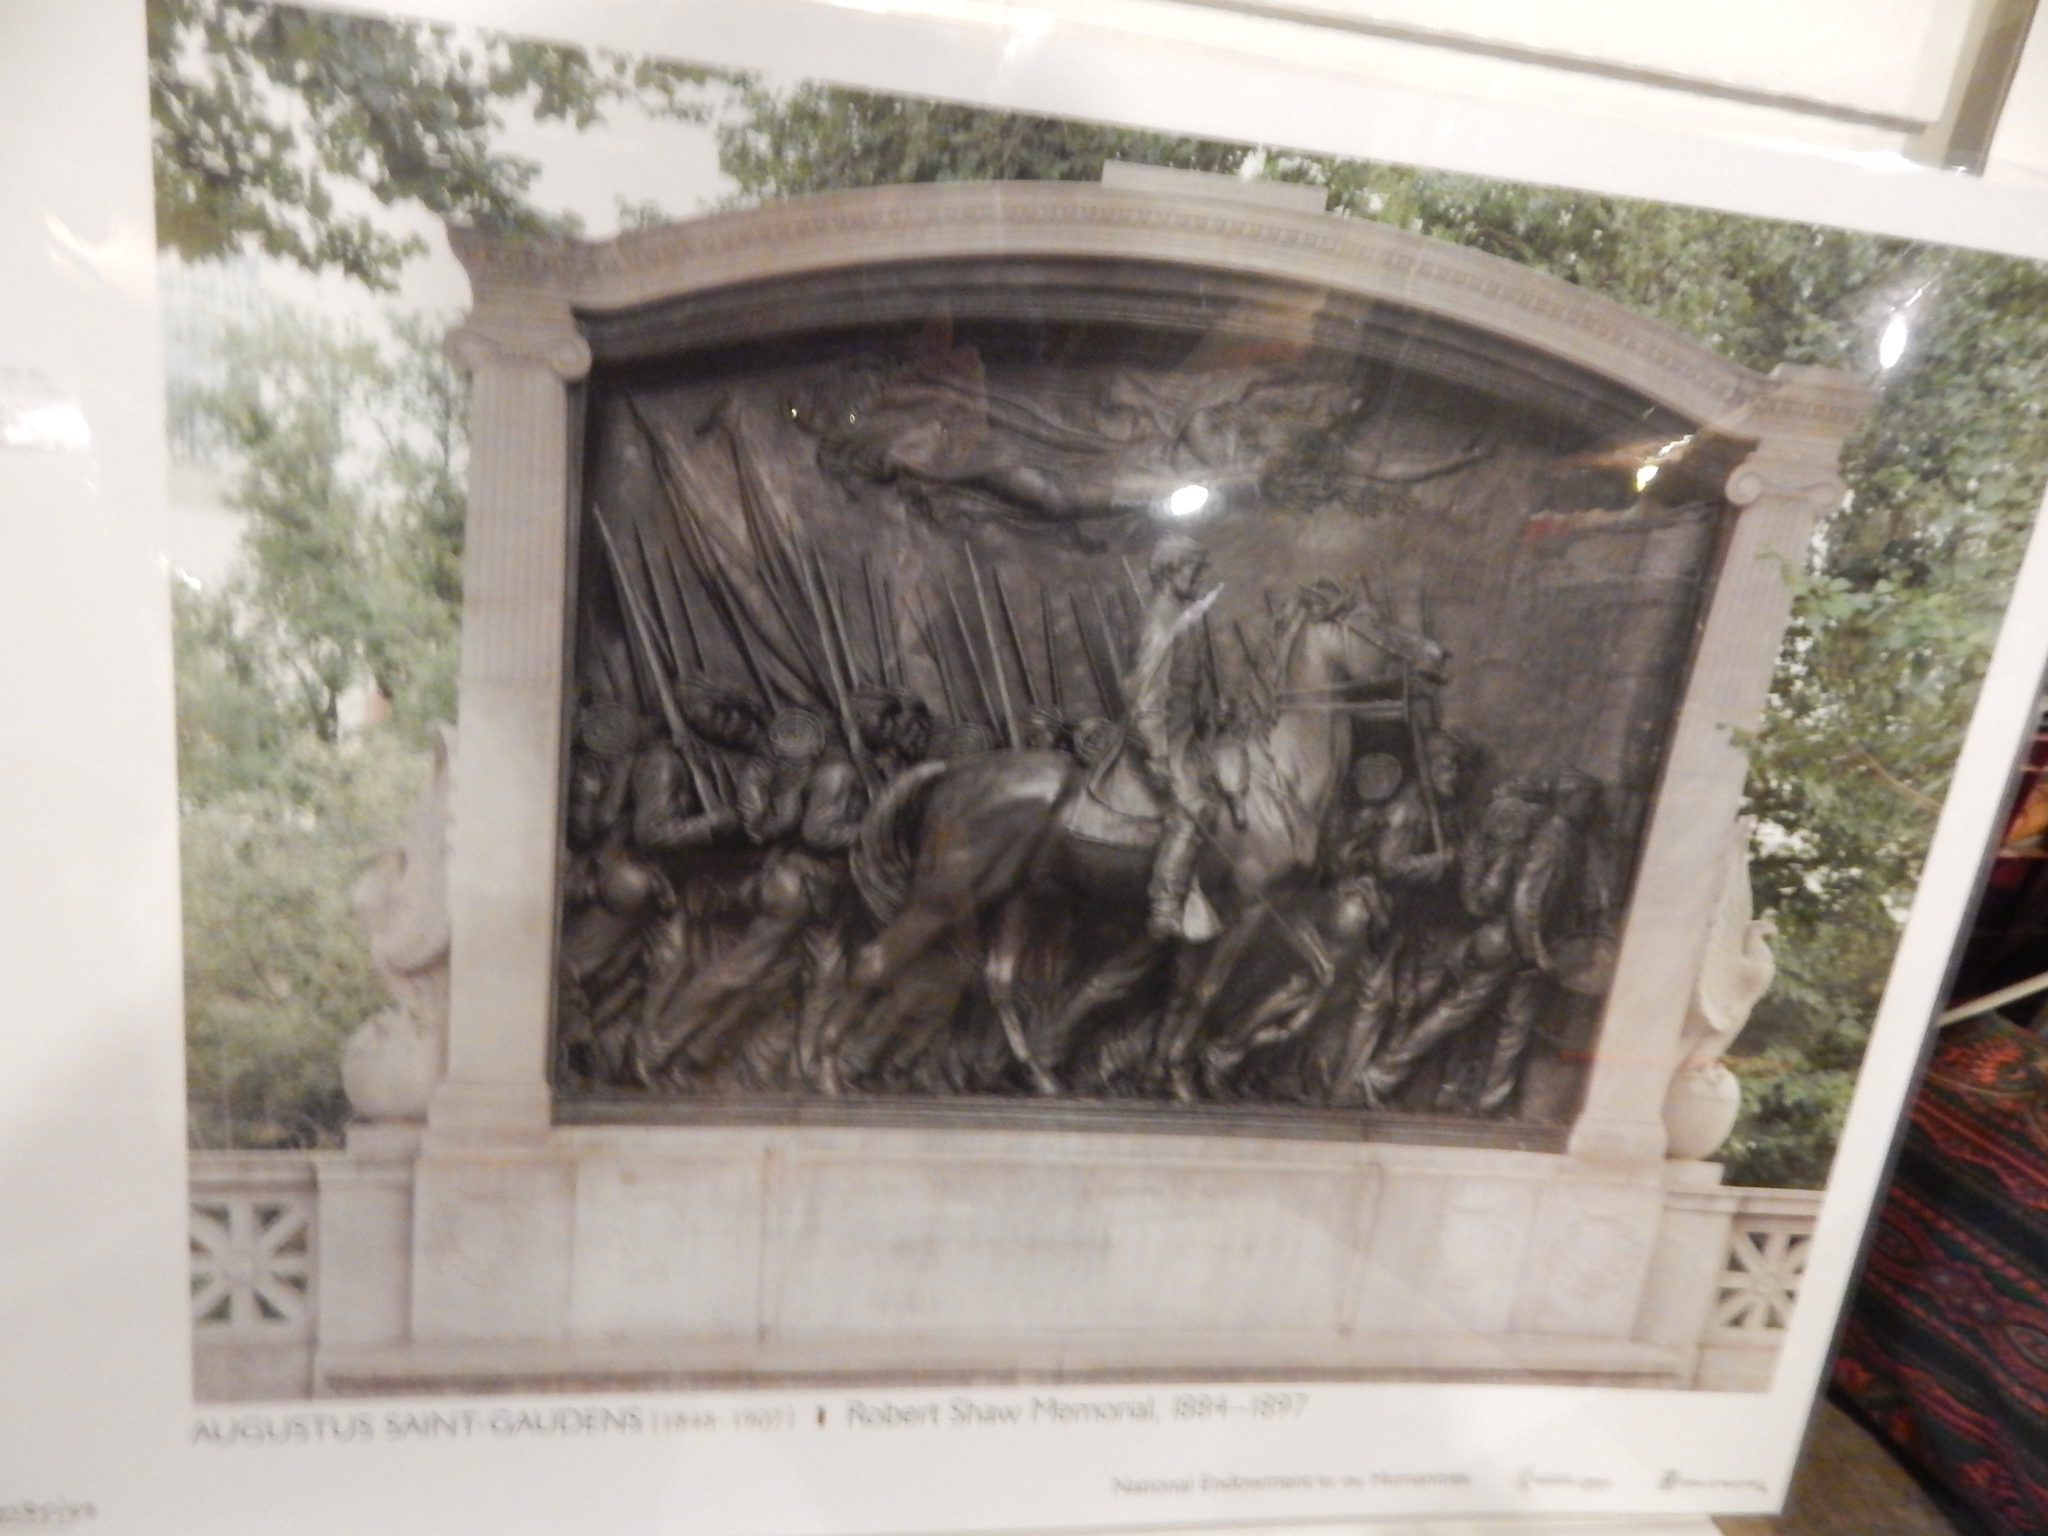 photo of Robert Shaw memorial